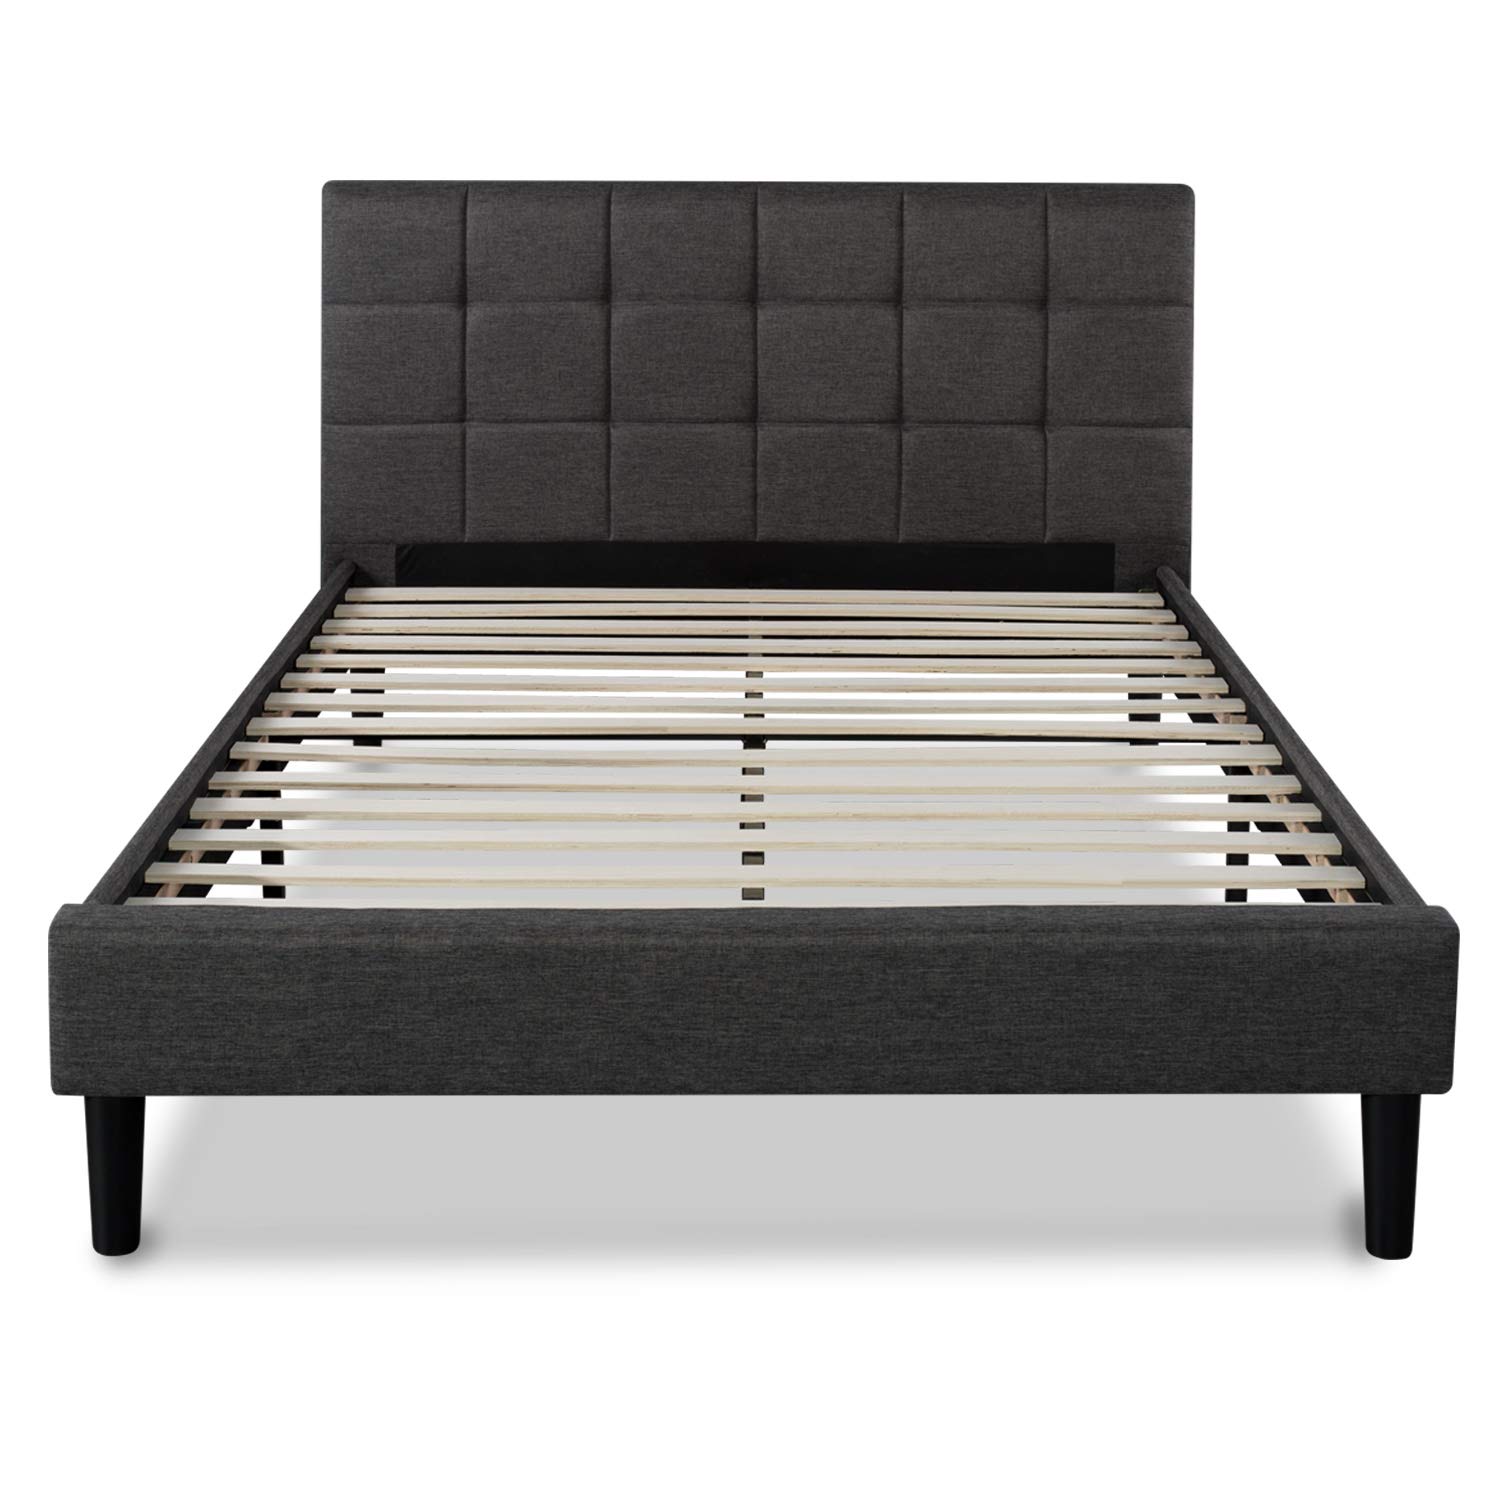 ZINUS Lottie Upholstered Platform Bed Frame / Mattress Foundation / Wood Slat Support / No Box Spring Needed / Easy Assembly, Grey, Full